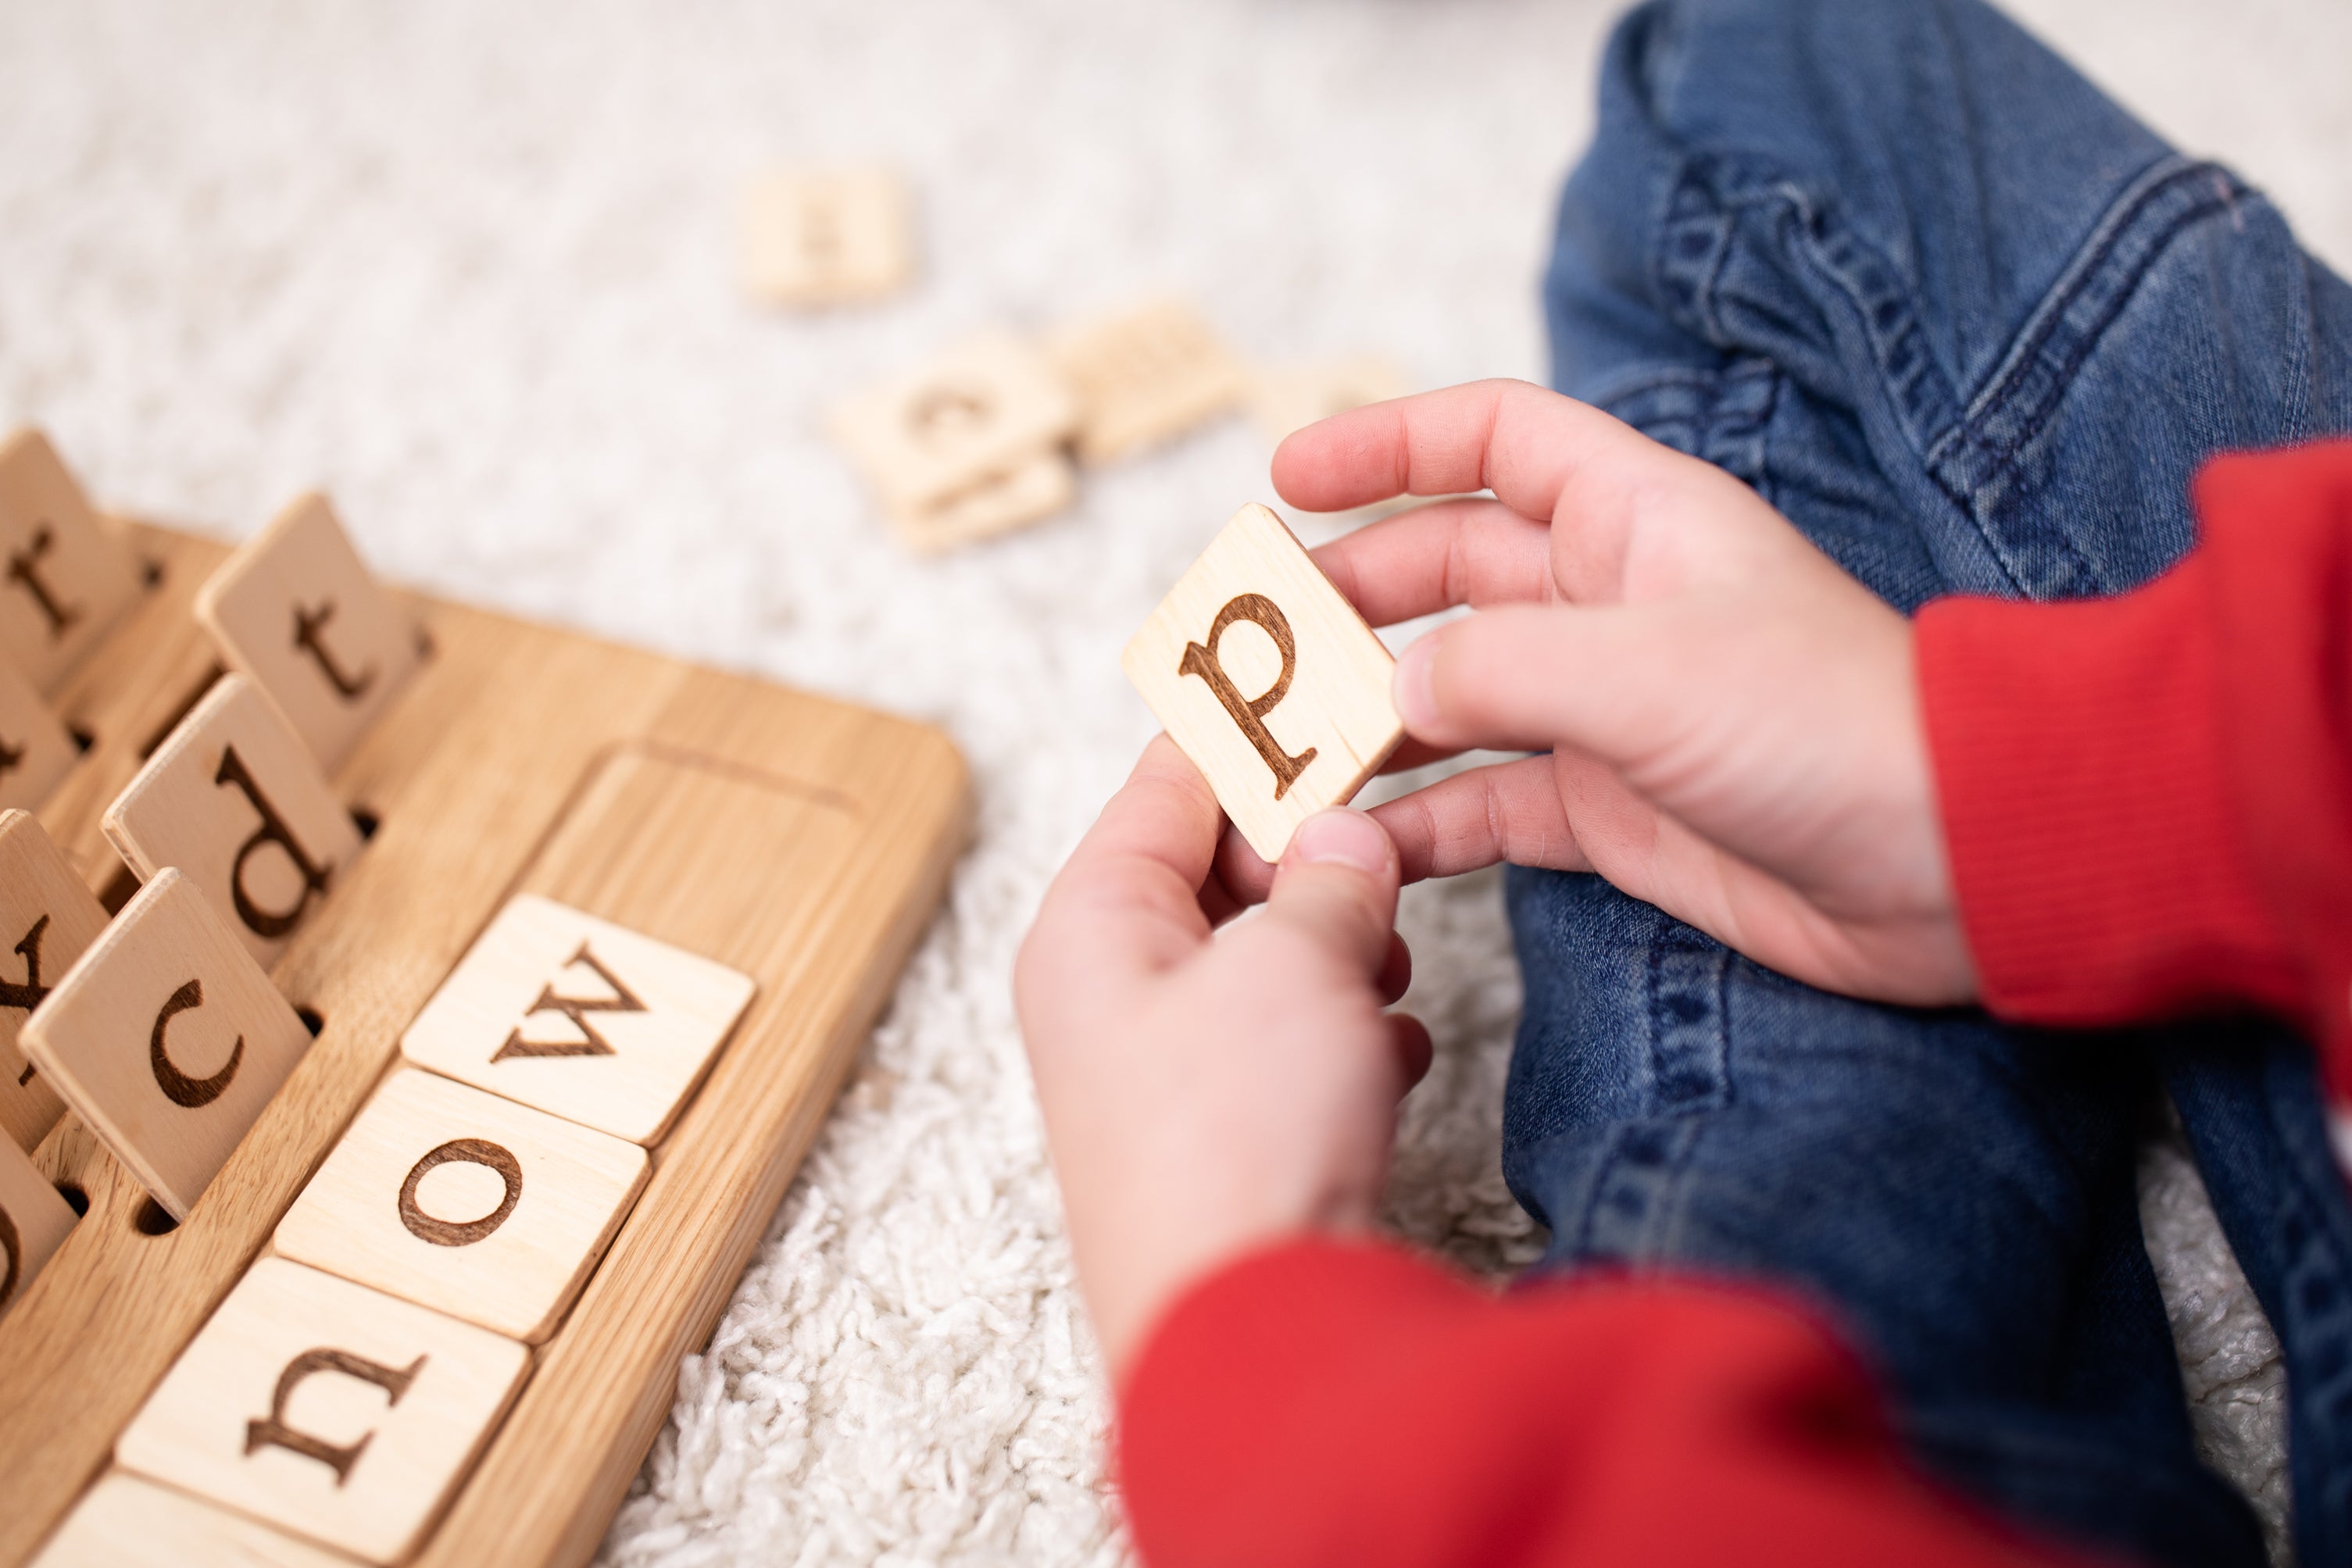 Montessori Alphabet wooden board